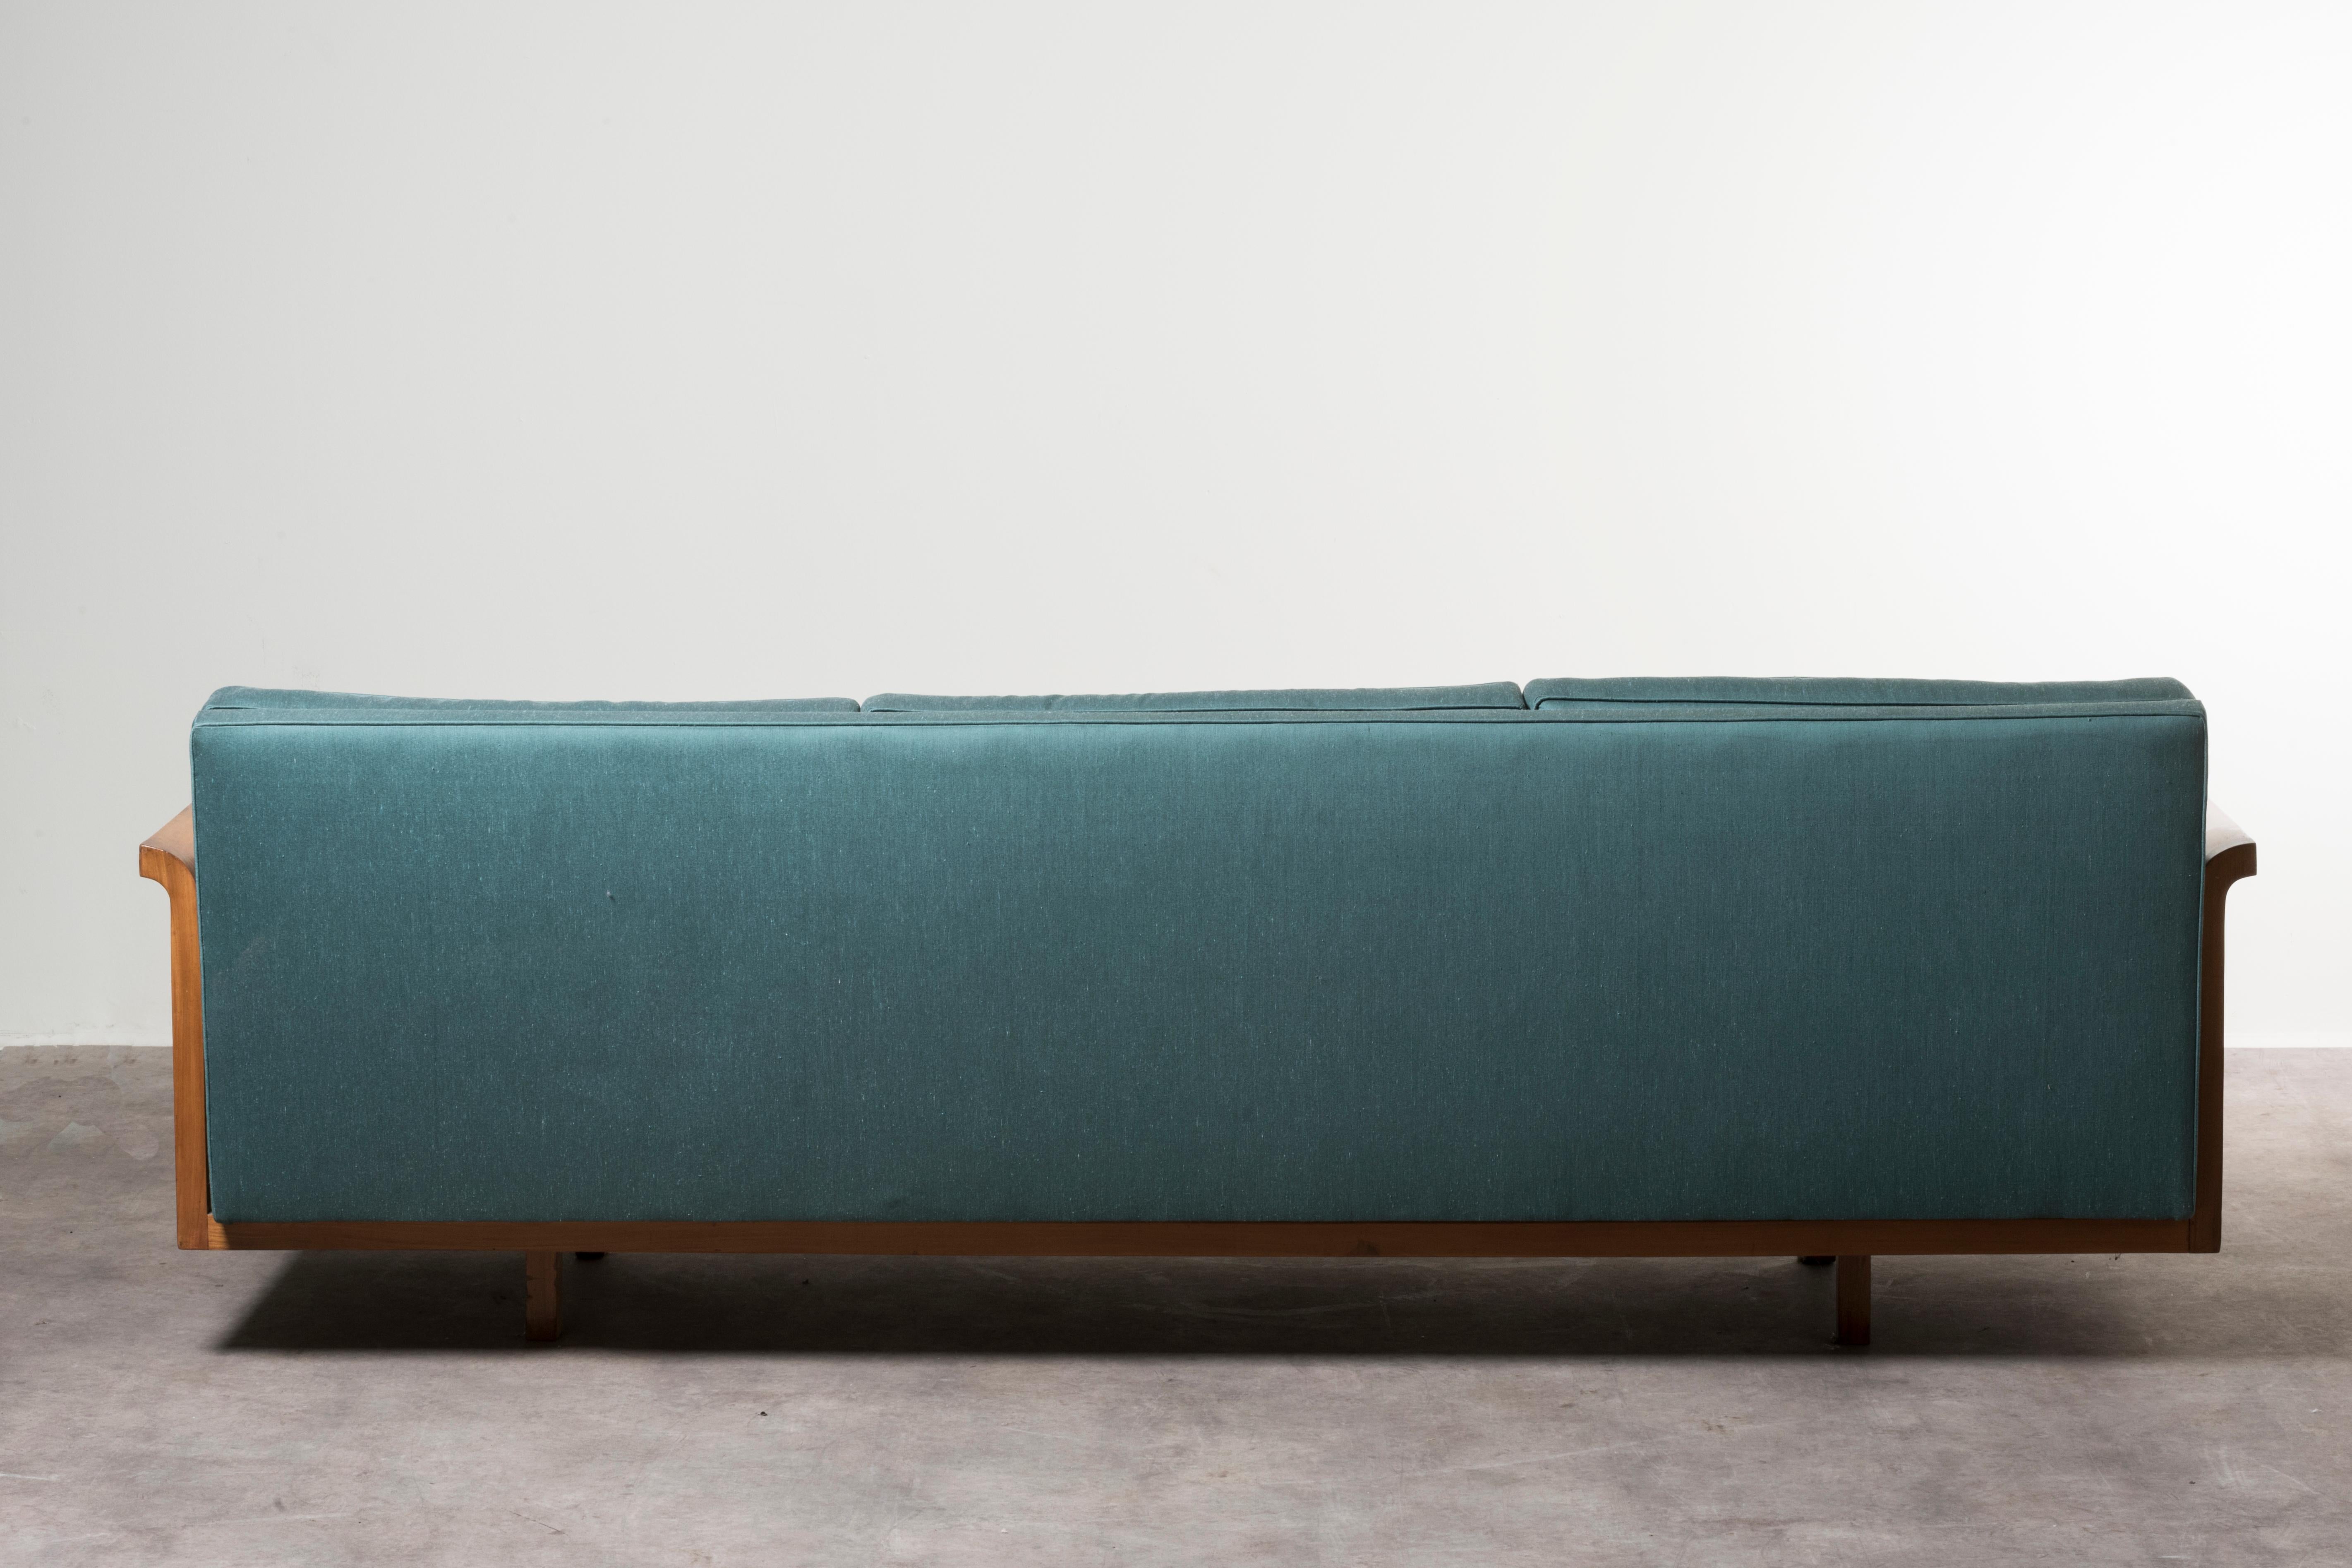 1950 Branco e Preto-Sofa wood fabric upholstery Manufactured by Paubrà In Good Condition For Sale In Milano, Lombardia